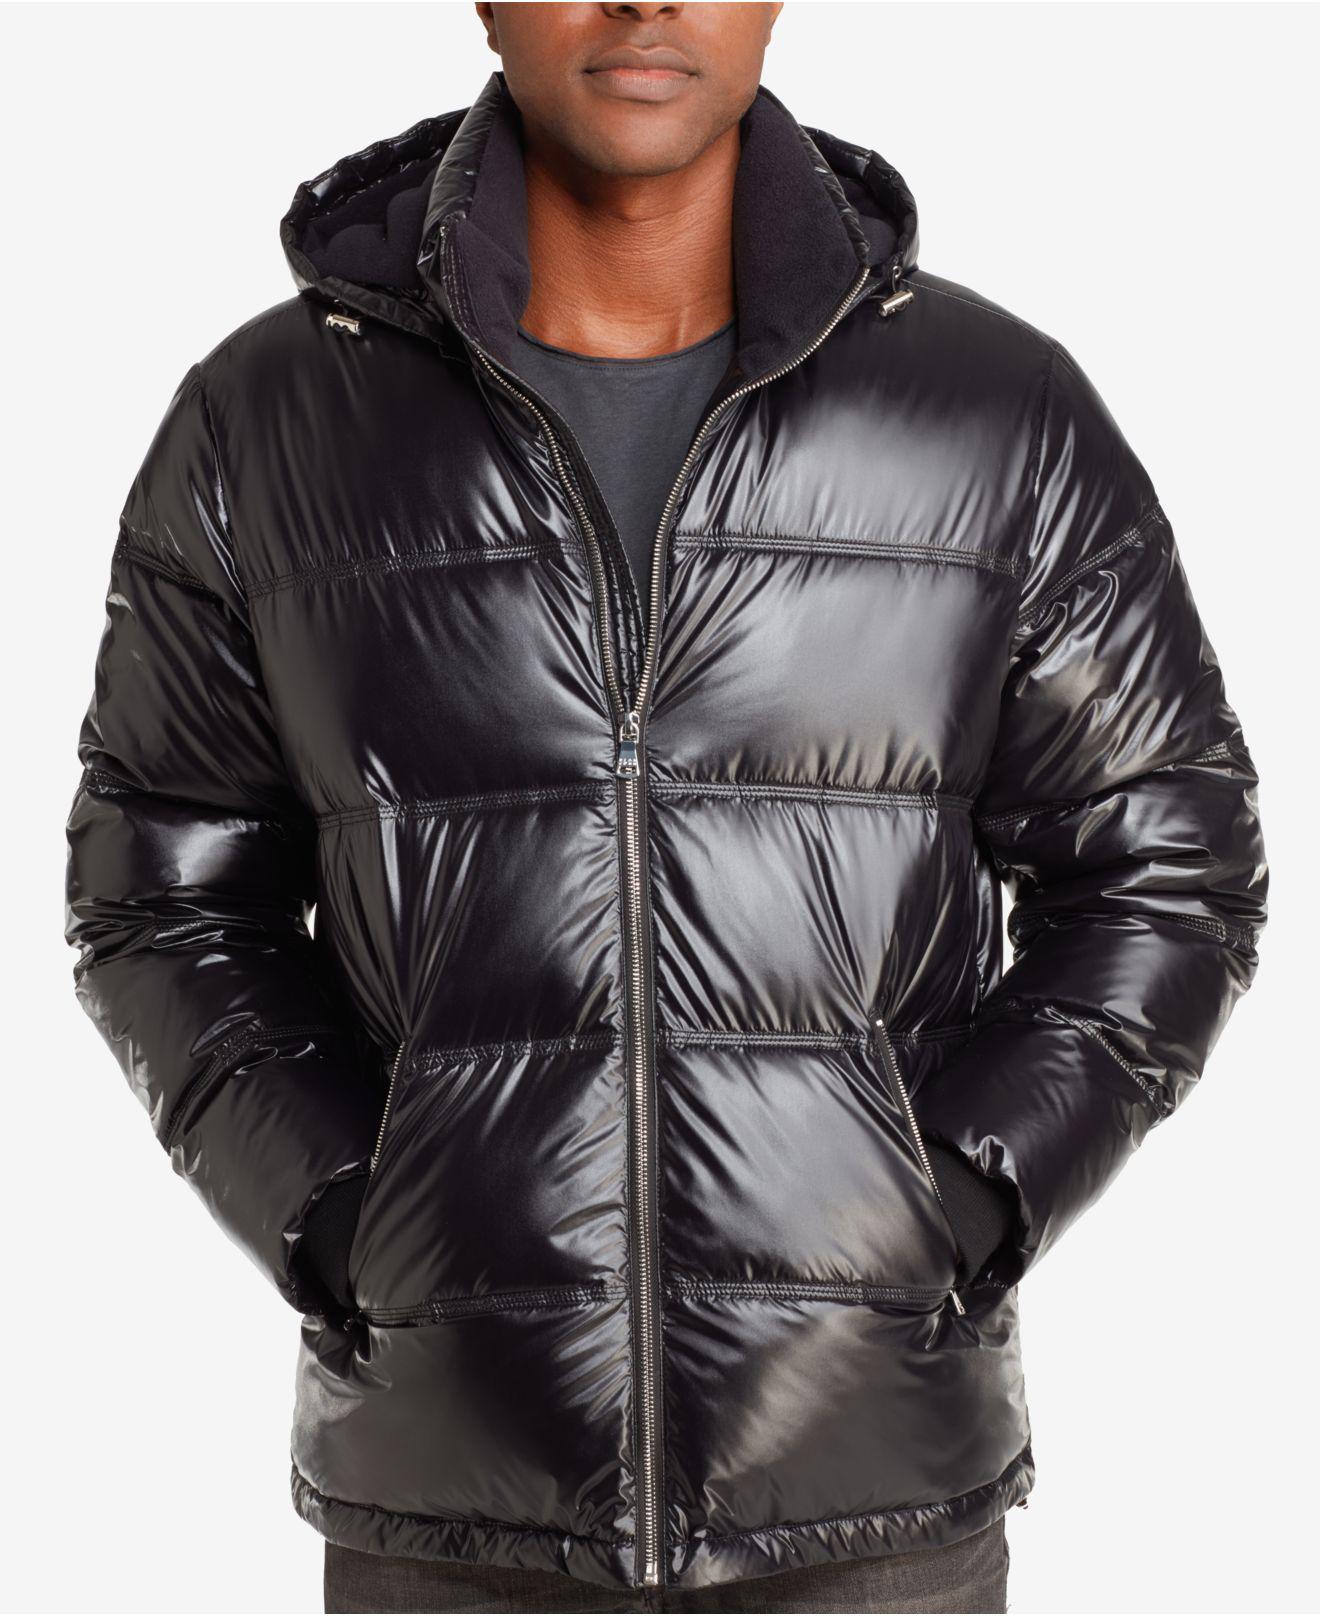 Sean John Men's Shiny Puffer Jacket in Black for Men - Lyst